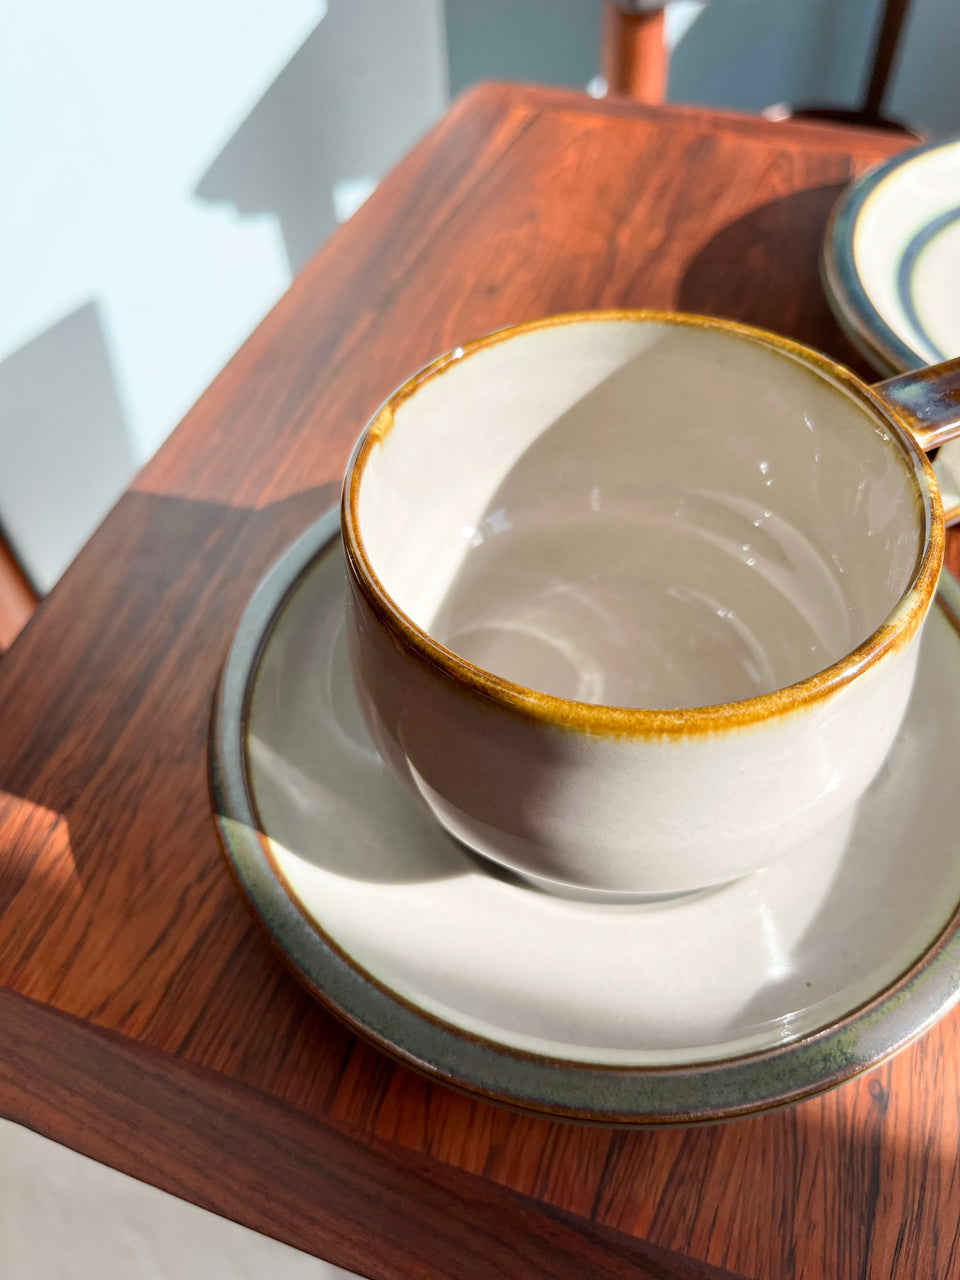 Bing & Grondahl Tema Teacup and Saucer Plate/ビングオーグレンダール ティーマ ティーカップ&ソーサー プレート 北欧食器 デンマークヴィンテージ